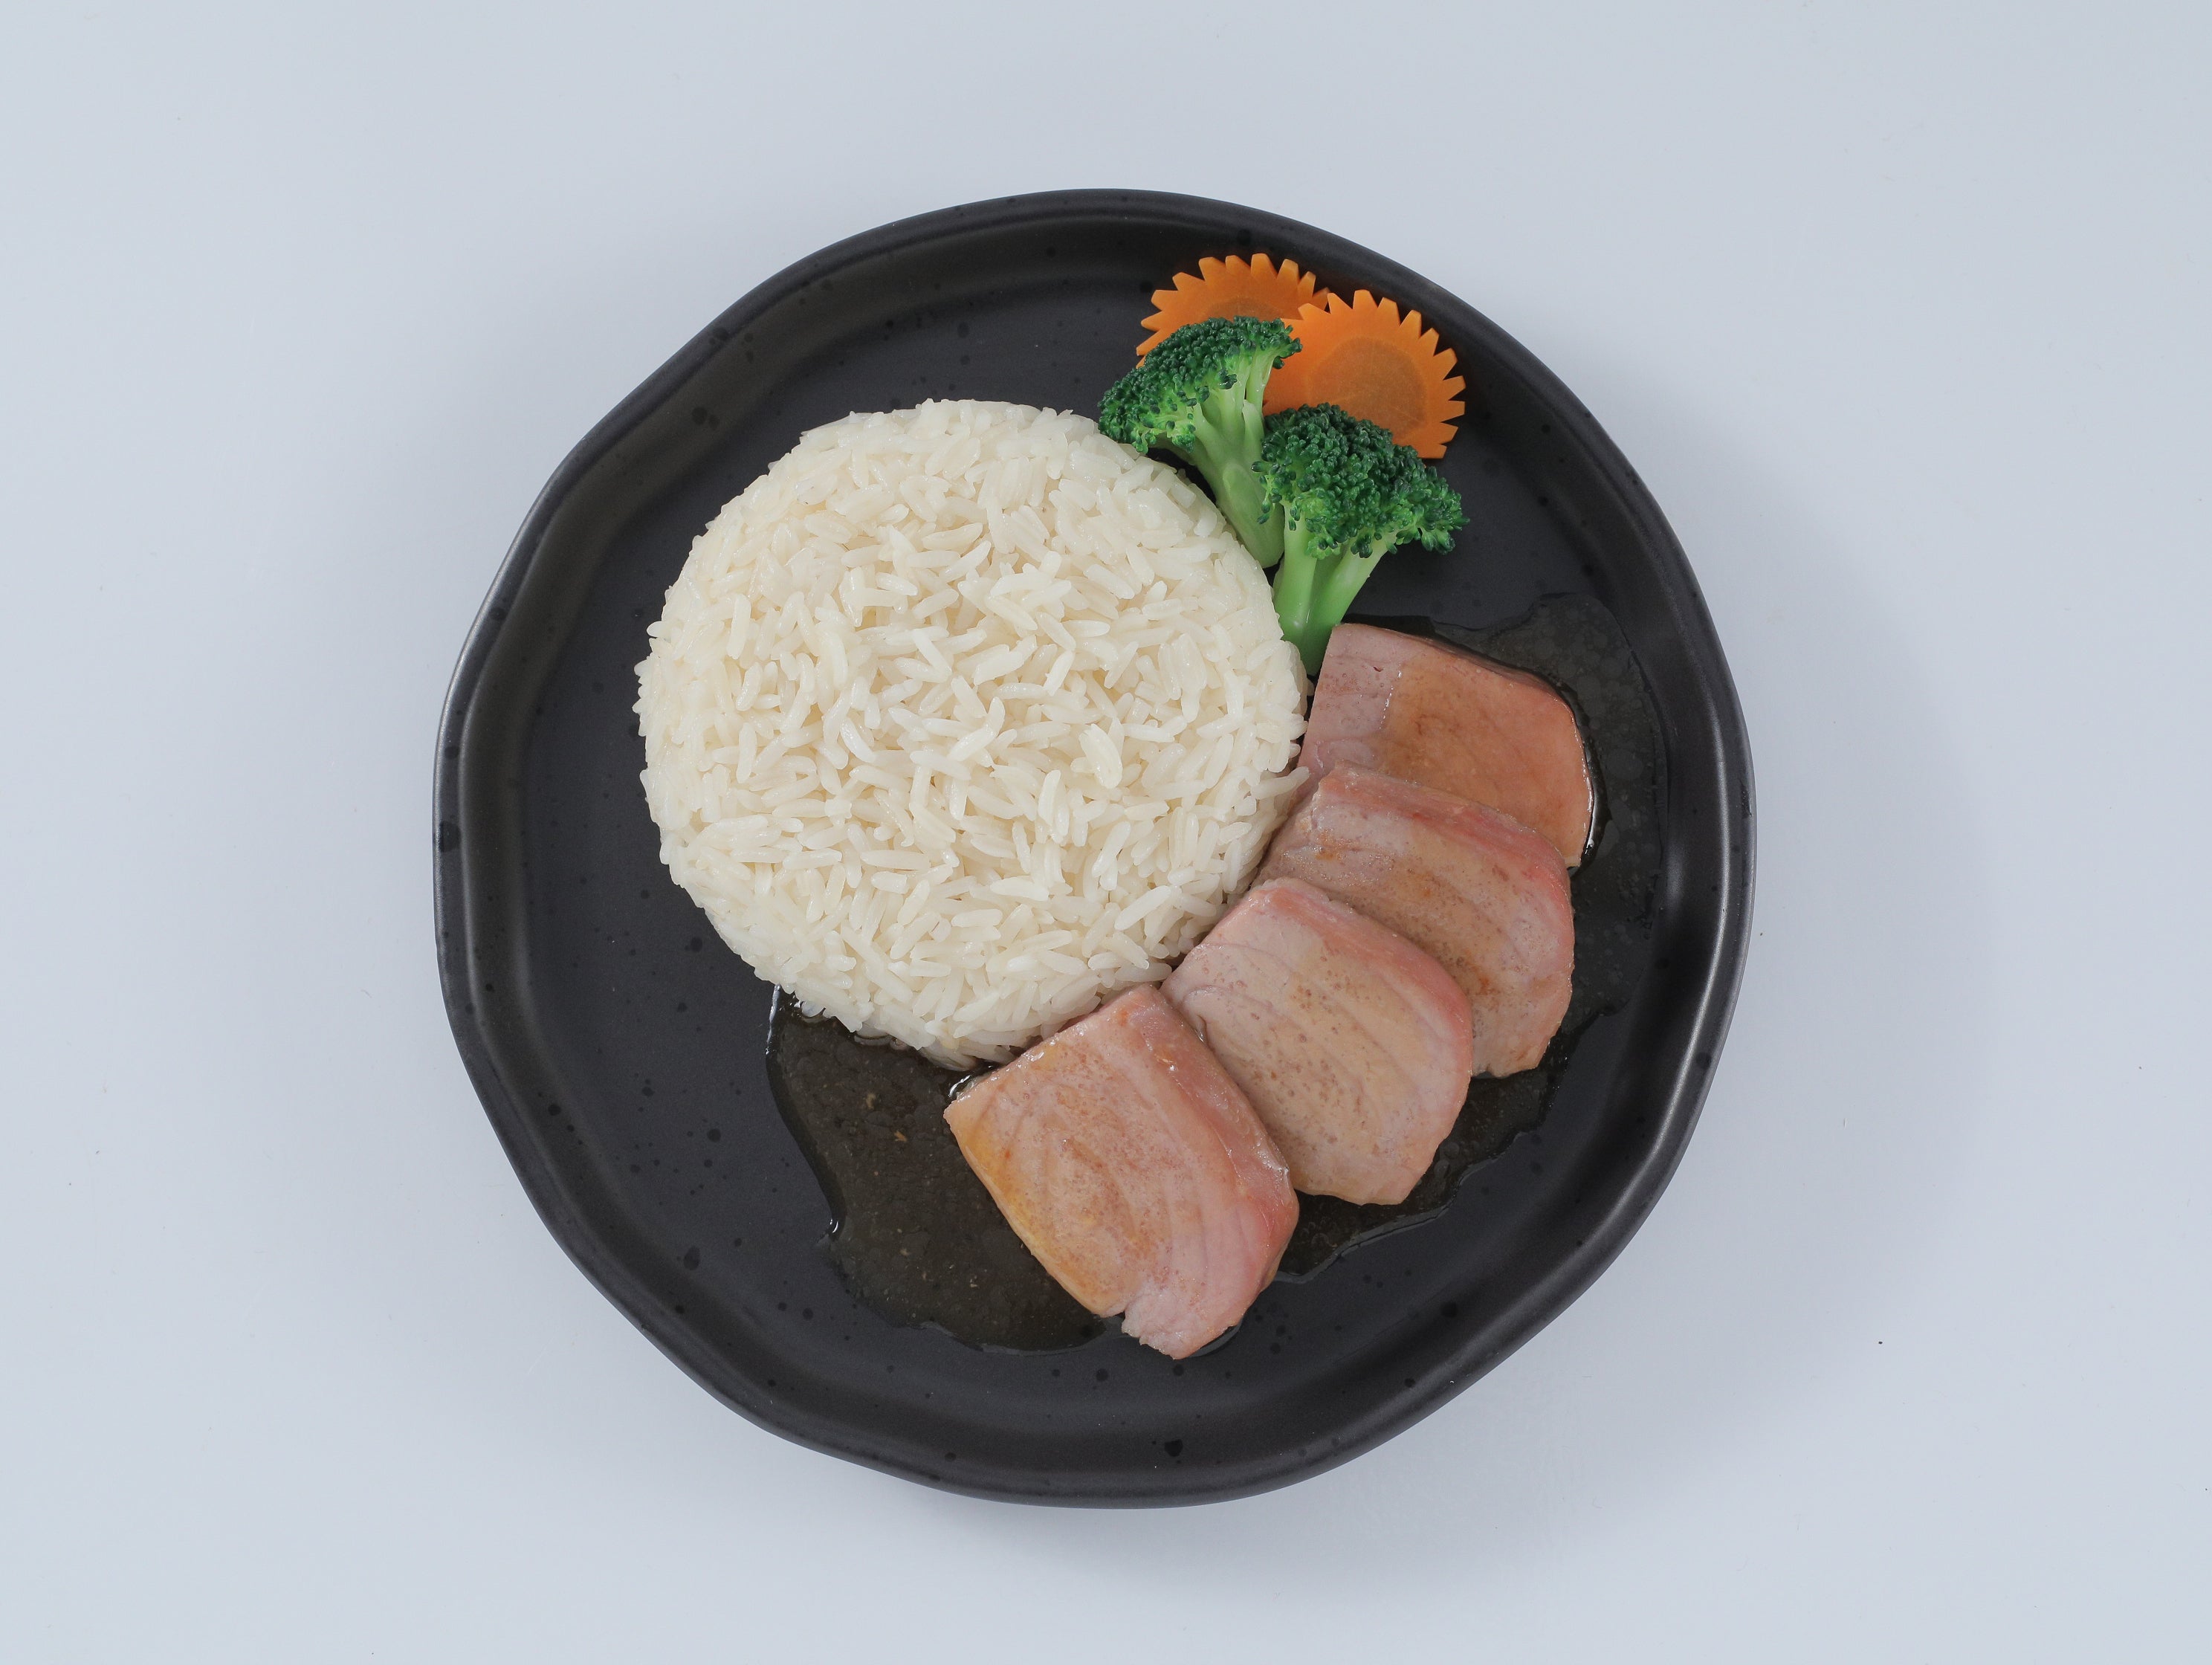 ShanYi Instant Microwave Meals Ready to Eat, 250g/8.8oz, Teriyaki Tuna Steak  with Jasmine Rice, Case of 6